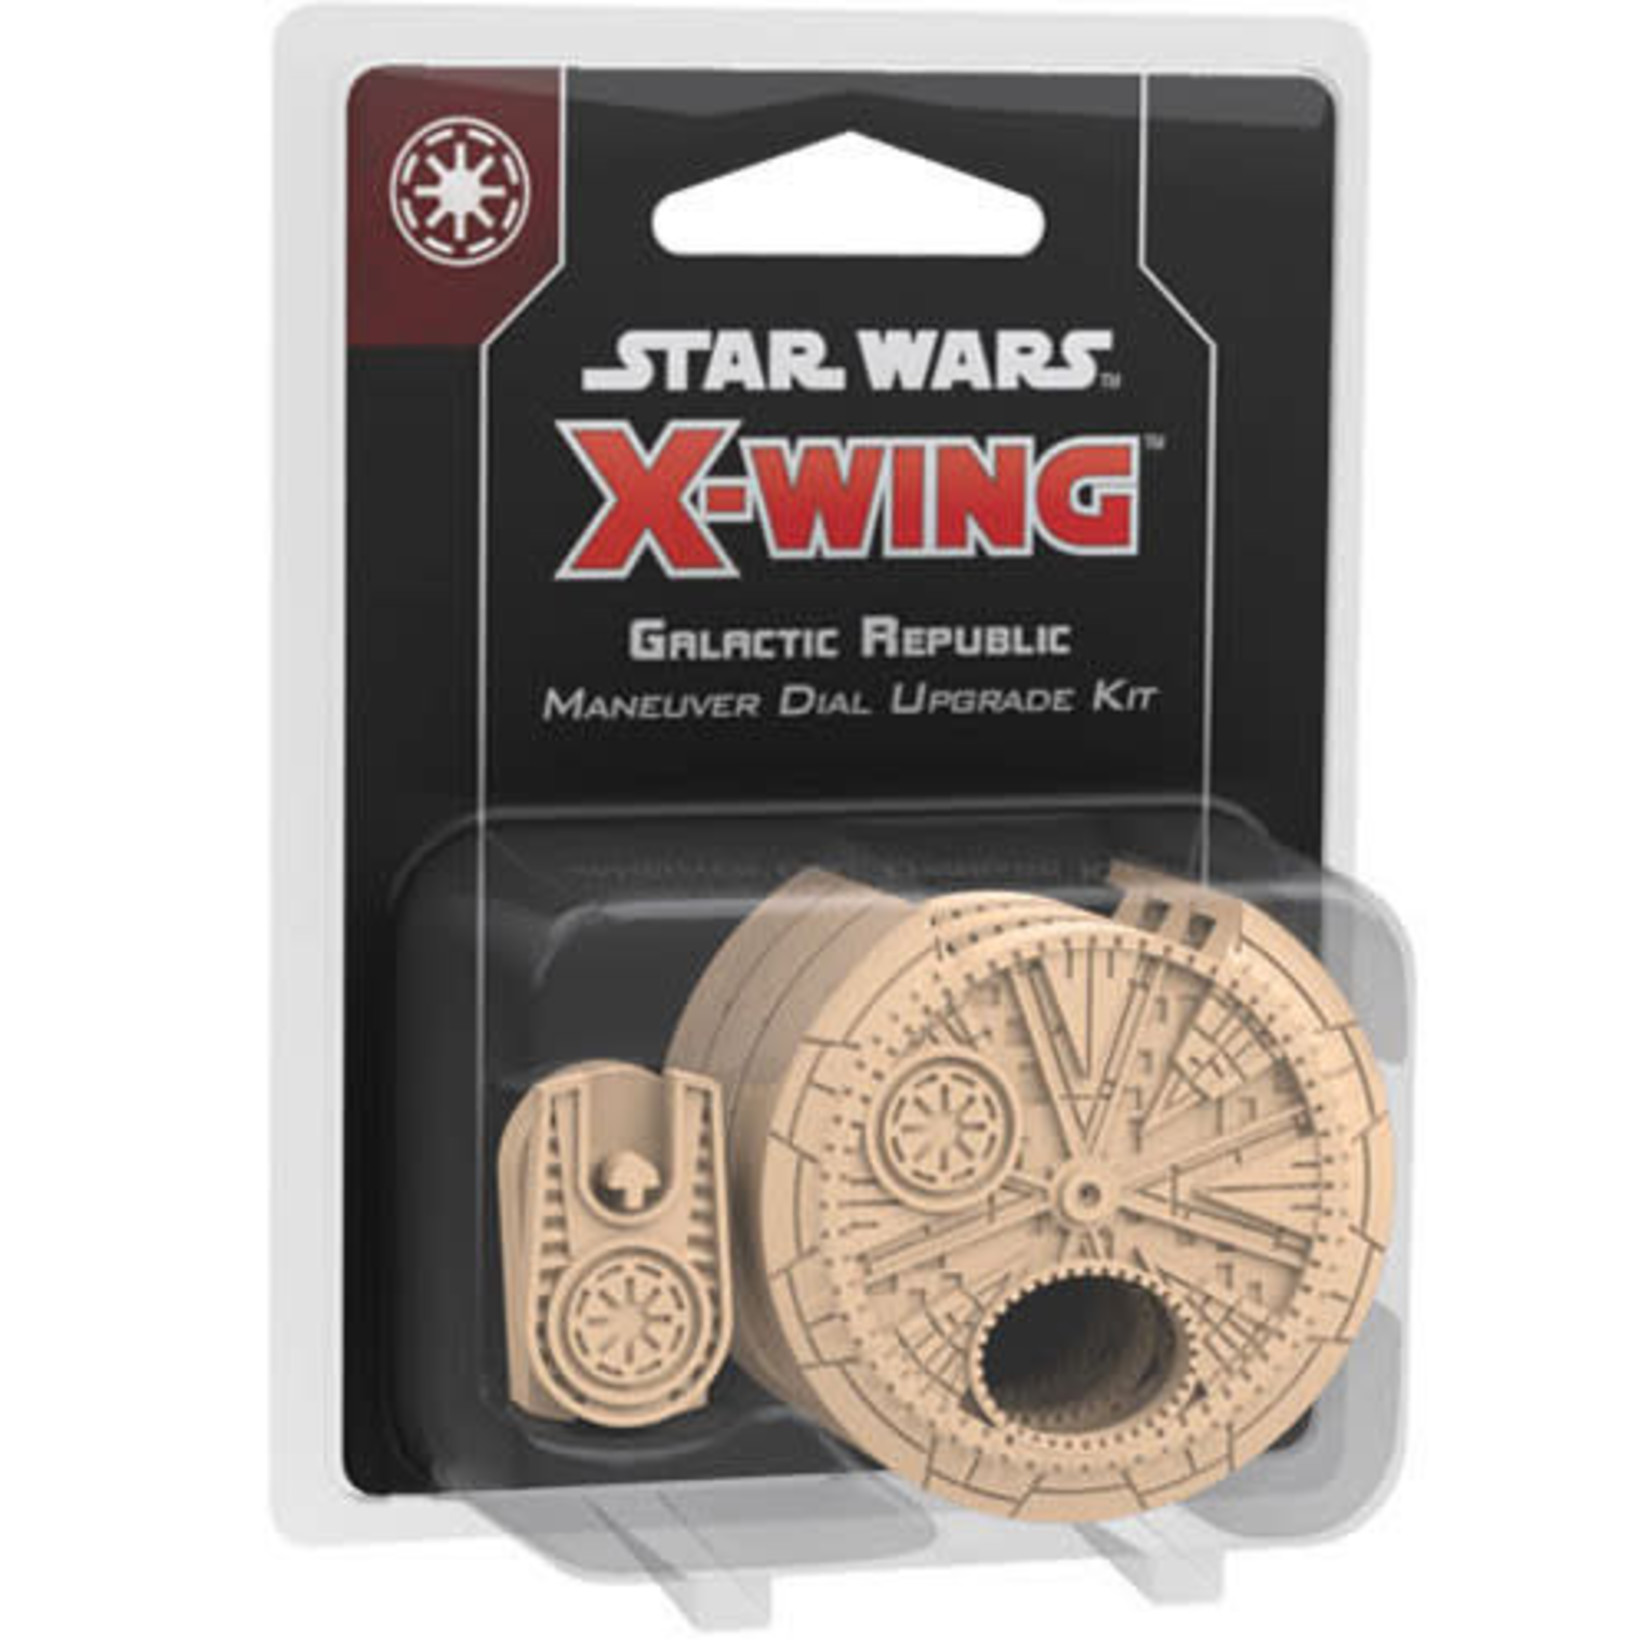 Star Wars X-Wing 2e: Galactic Republic Maneuver Dial Upgrade Kit